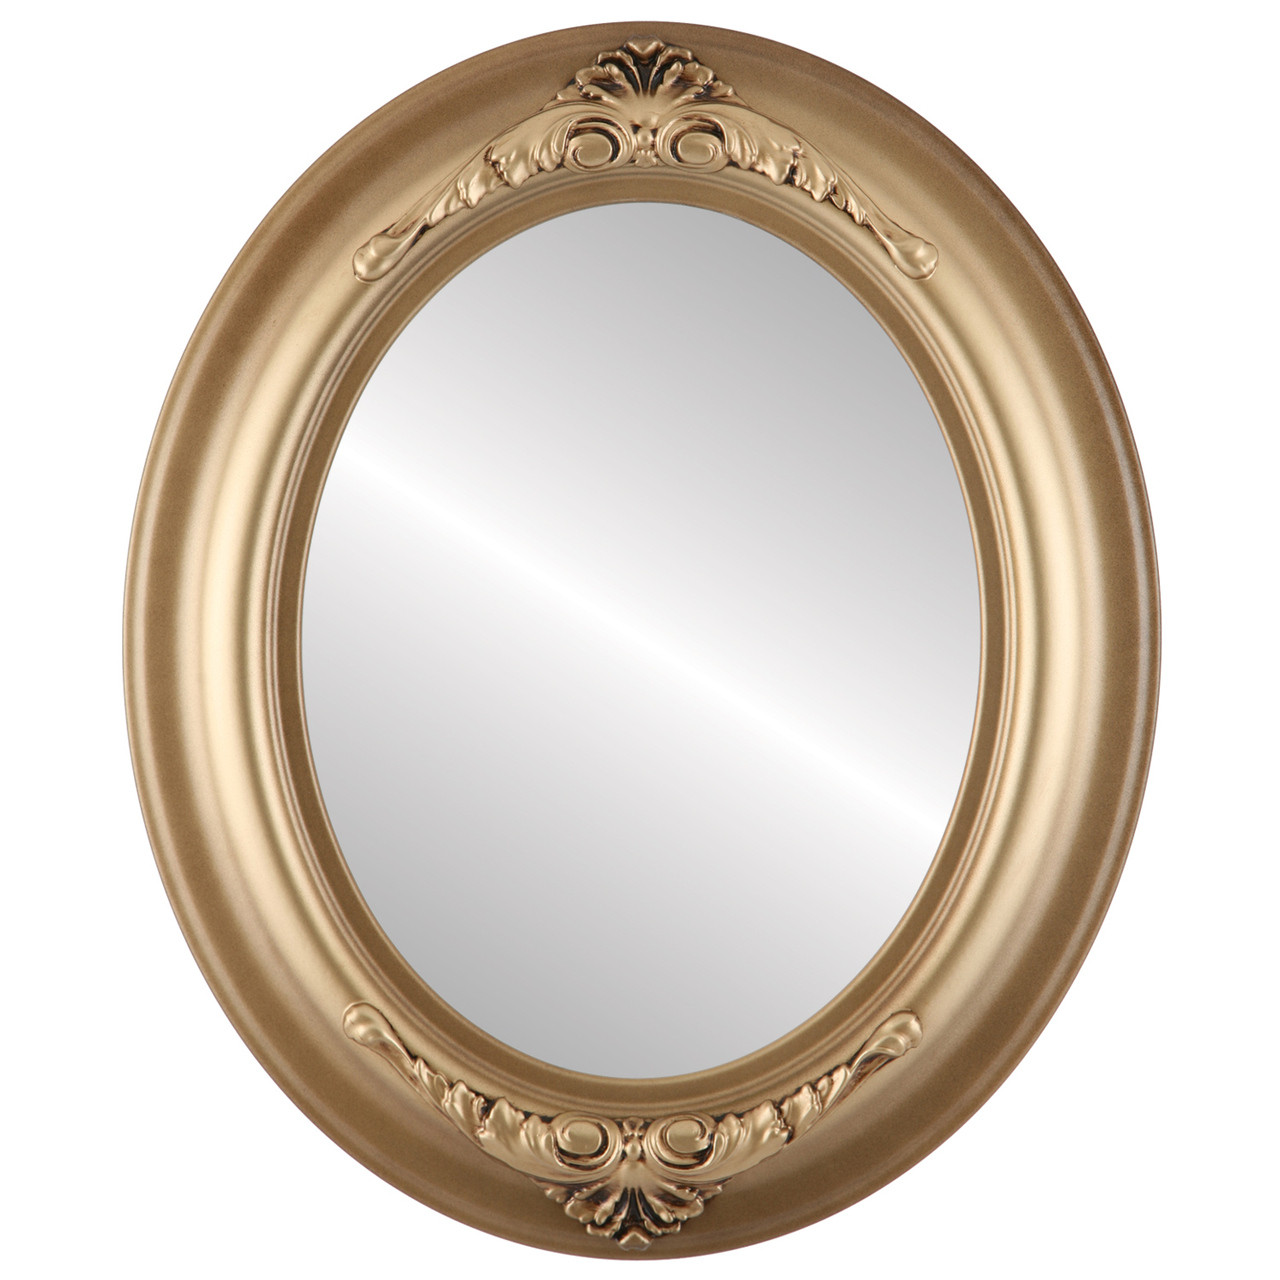 Winchester Oval framed mirror Desert Gold |Victorian Frames